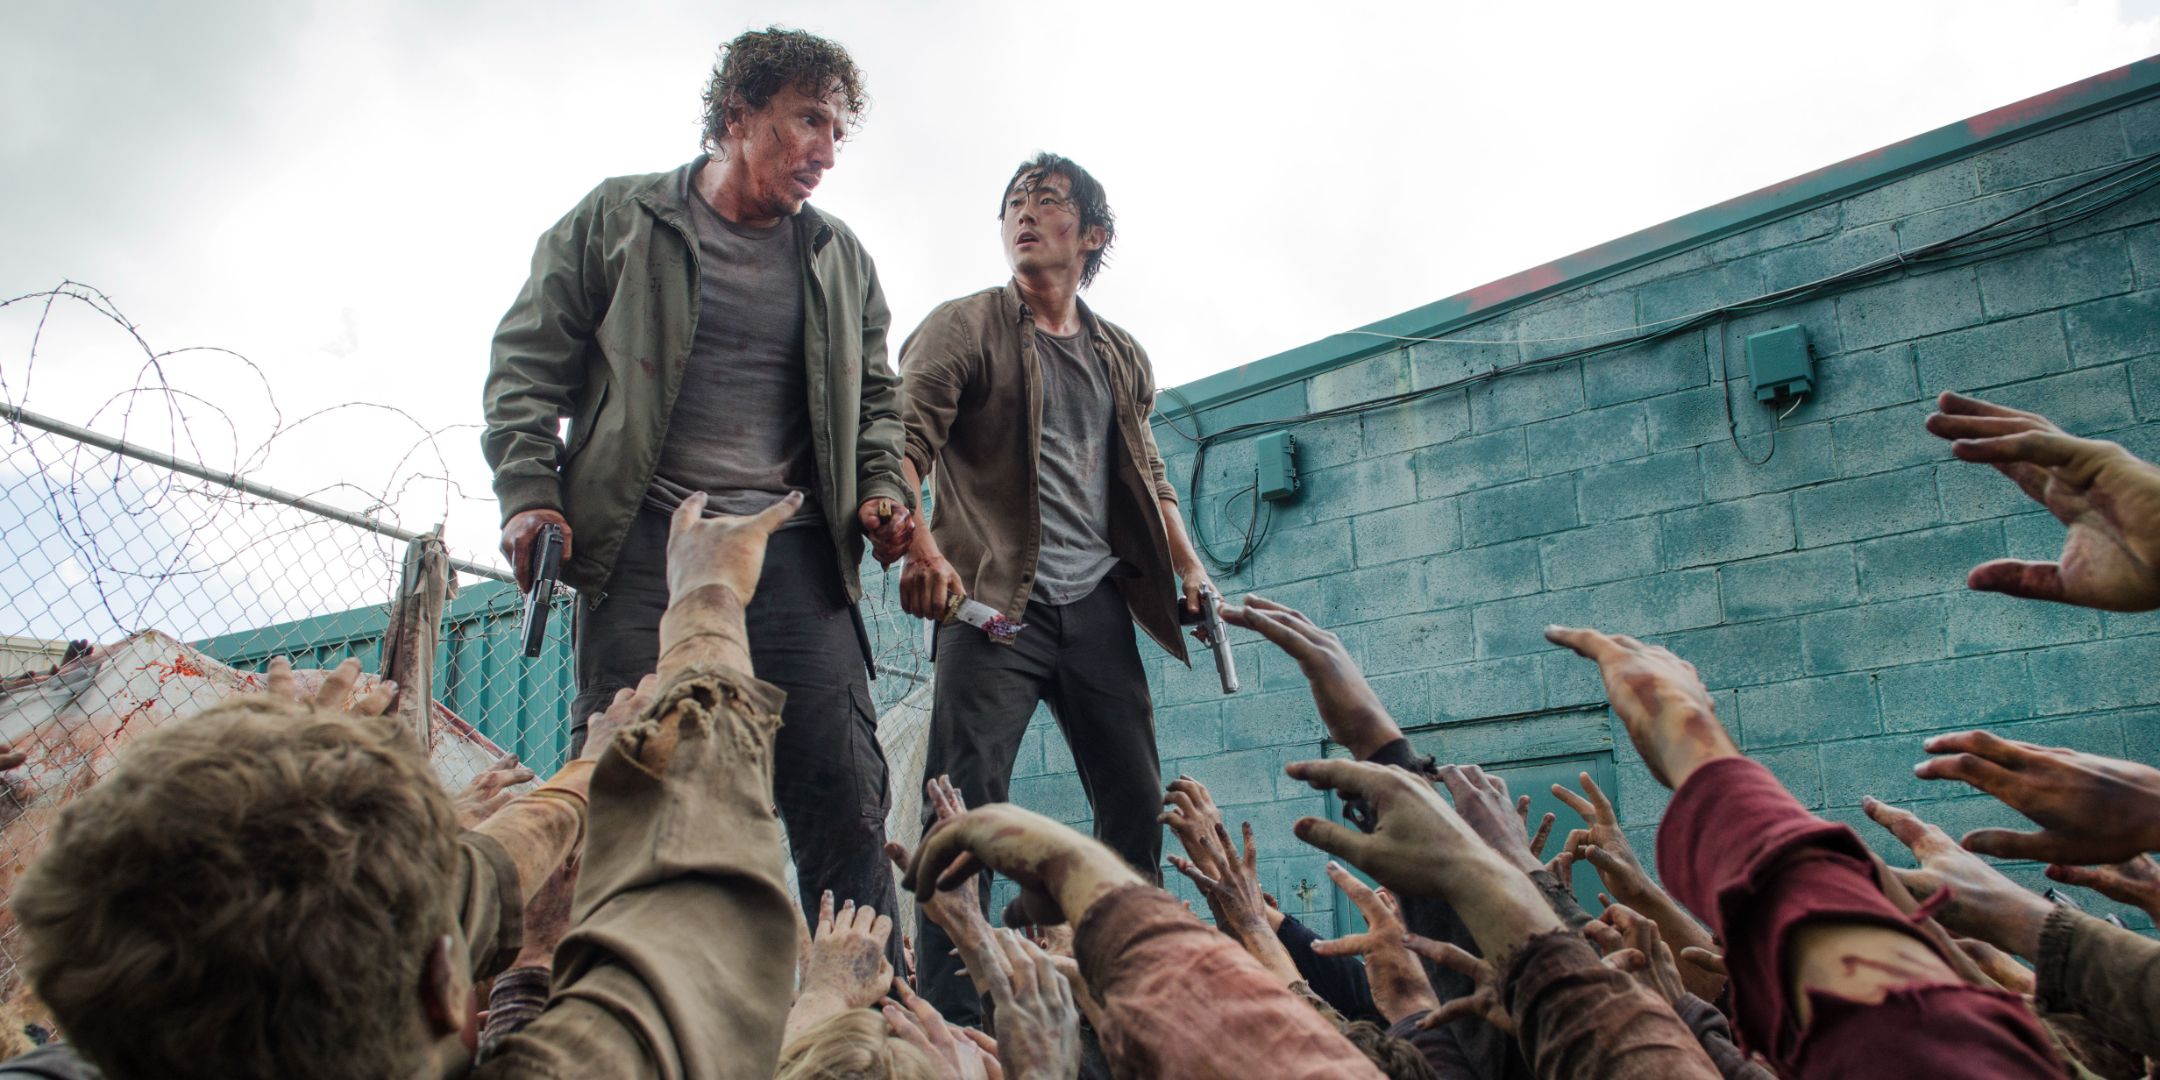 Steven Yeun as Glenn and Michael Traynor as Nicholas standing on bin in The Walking Dead.